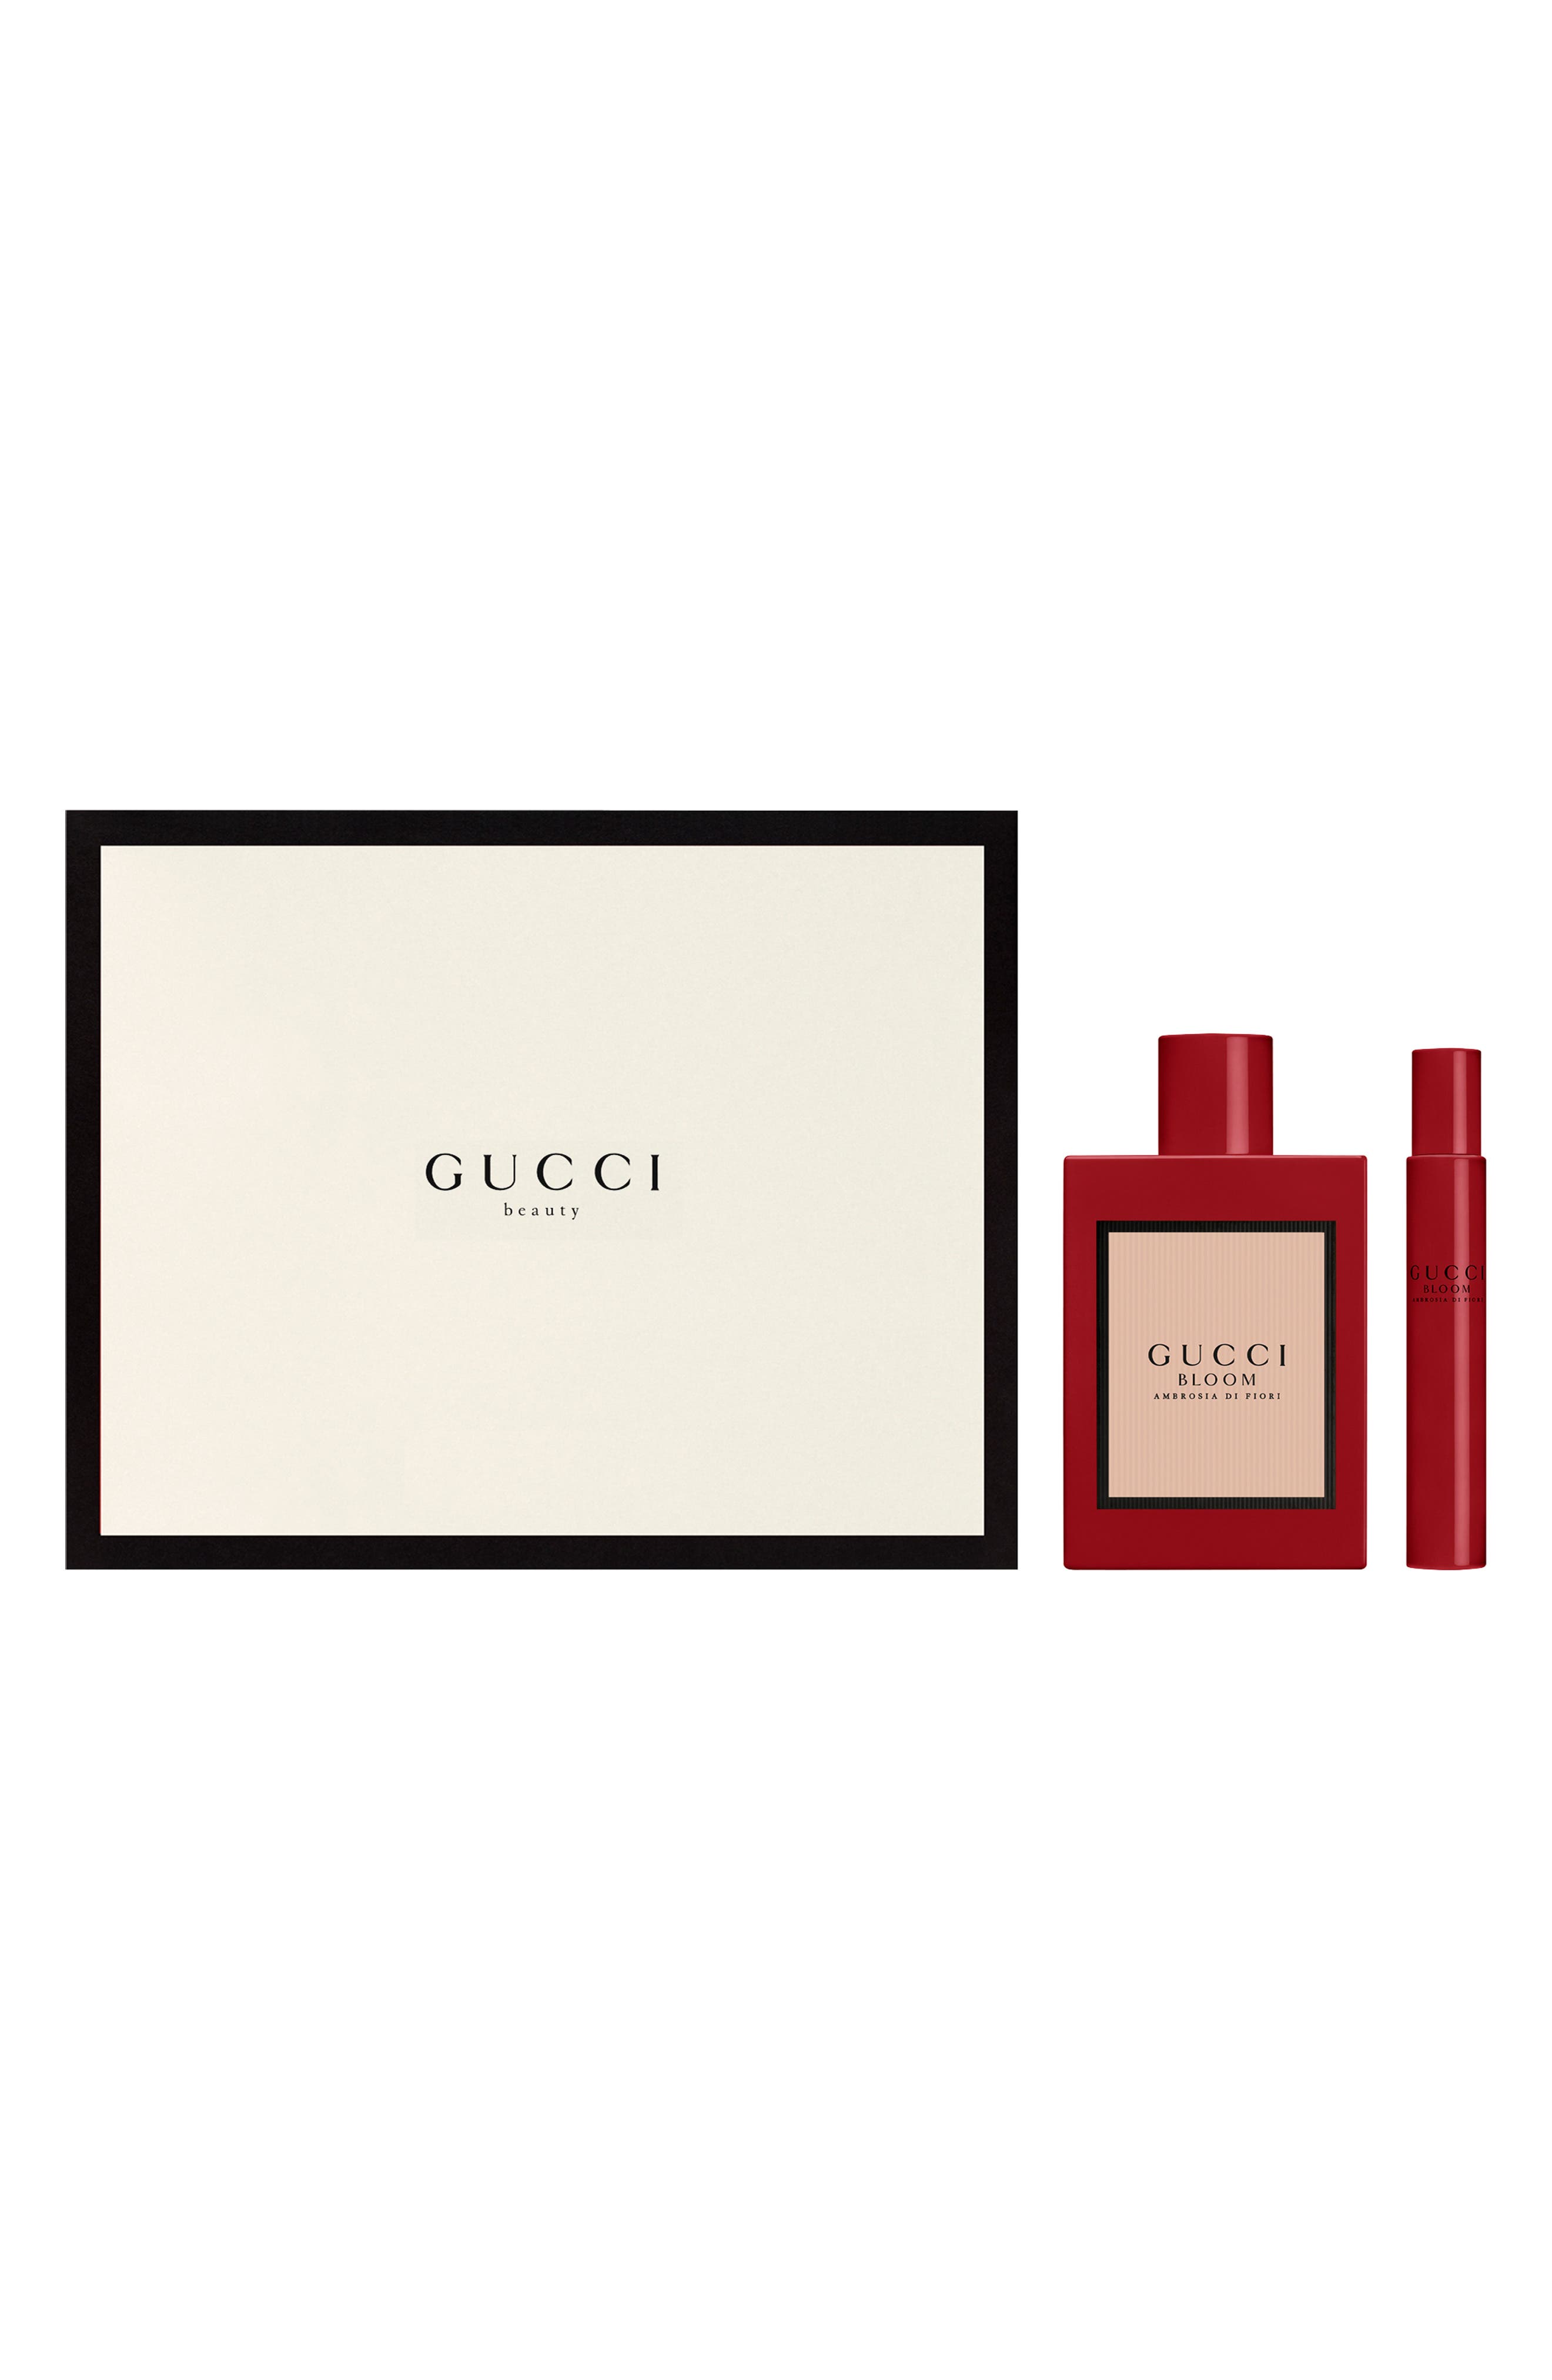 gucci fragrance gift set